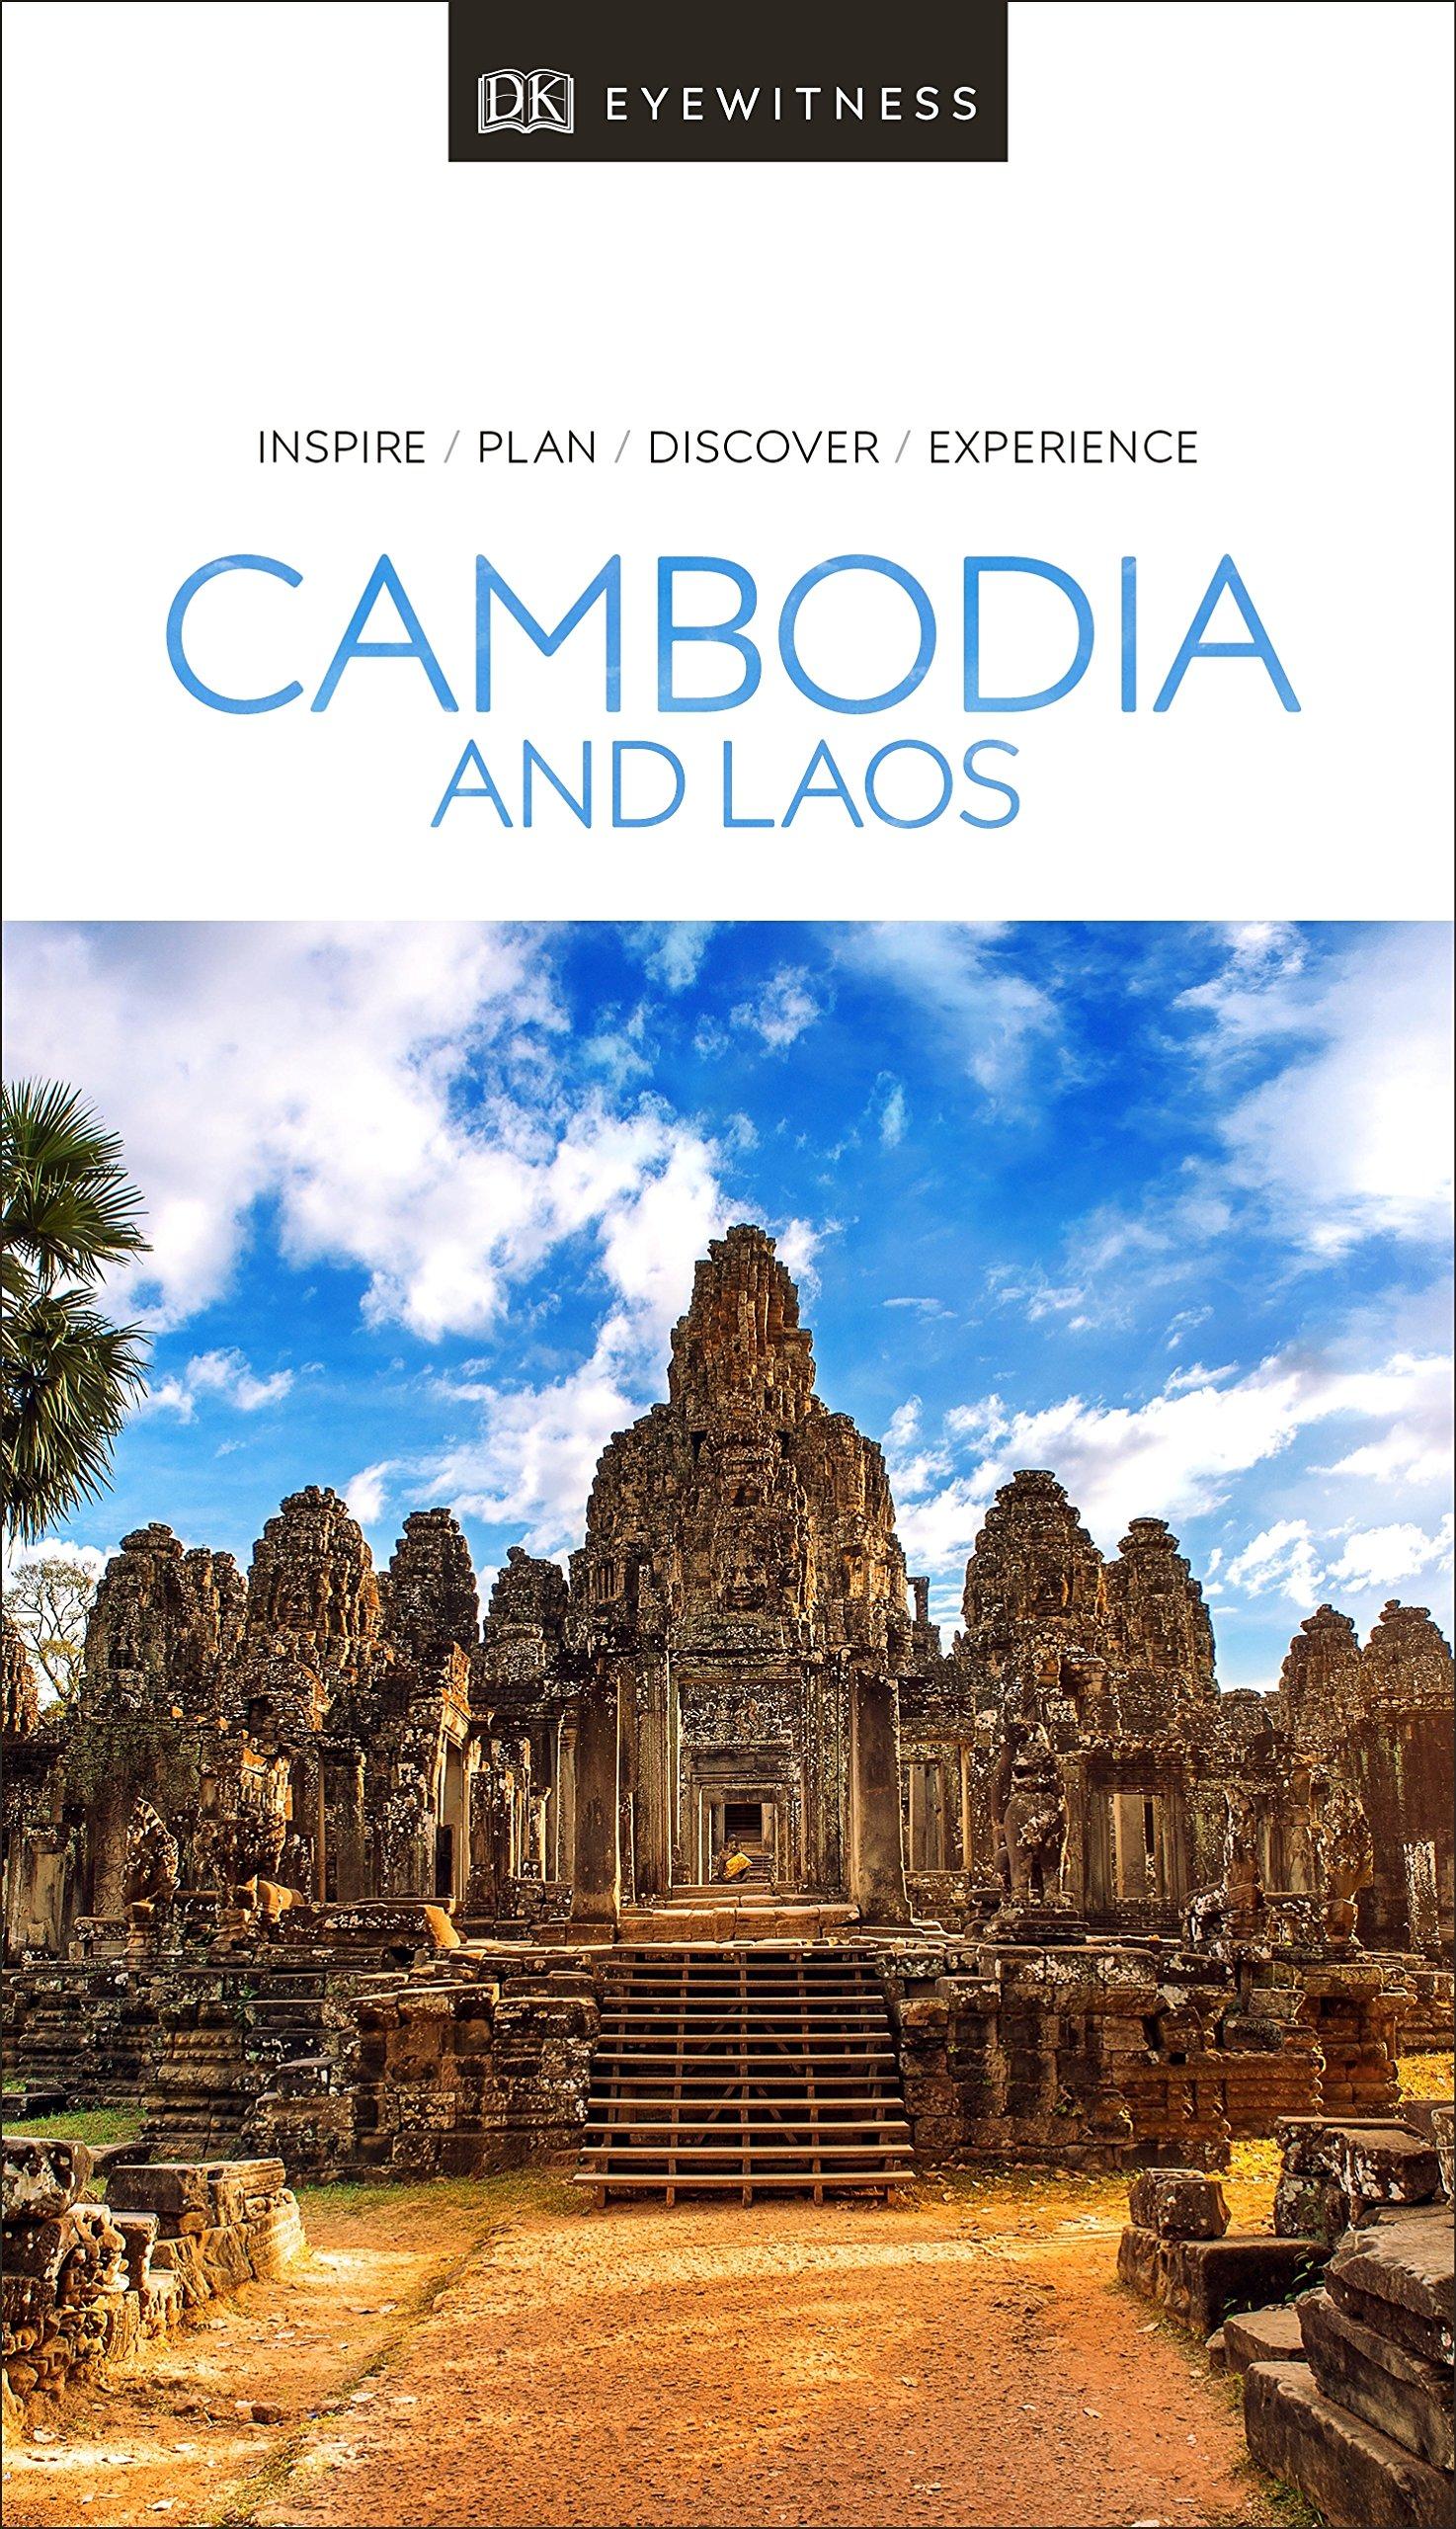 Dk Eyewitness: Cambodia and Laos